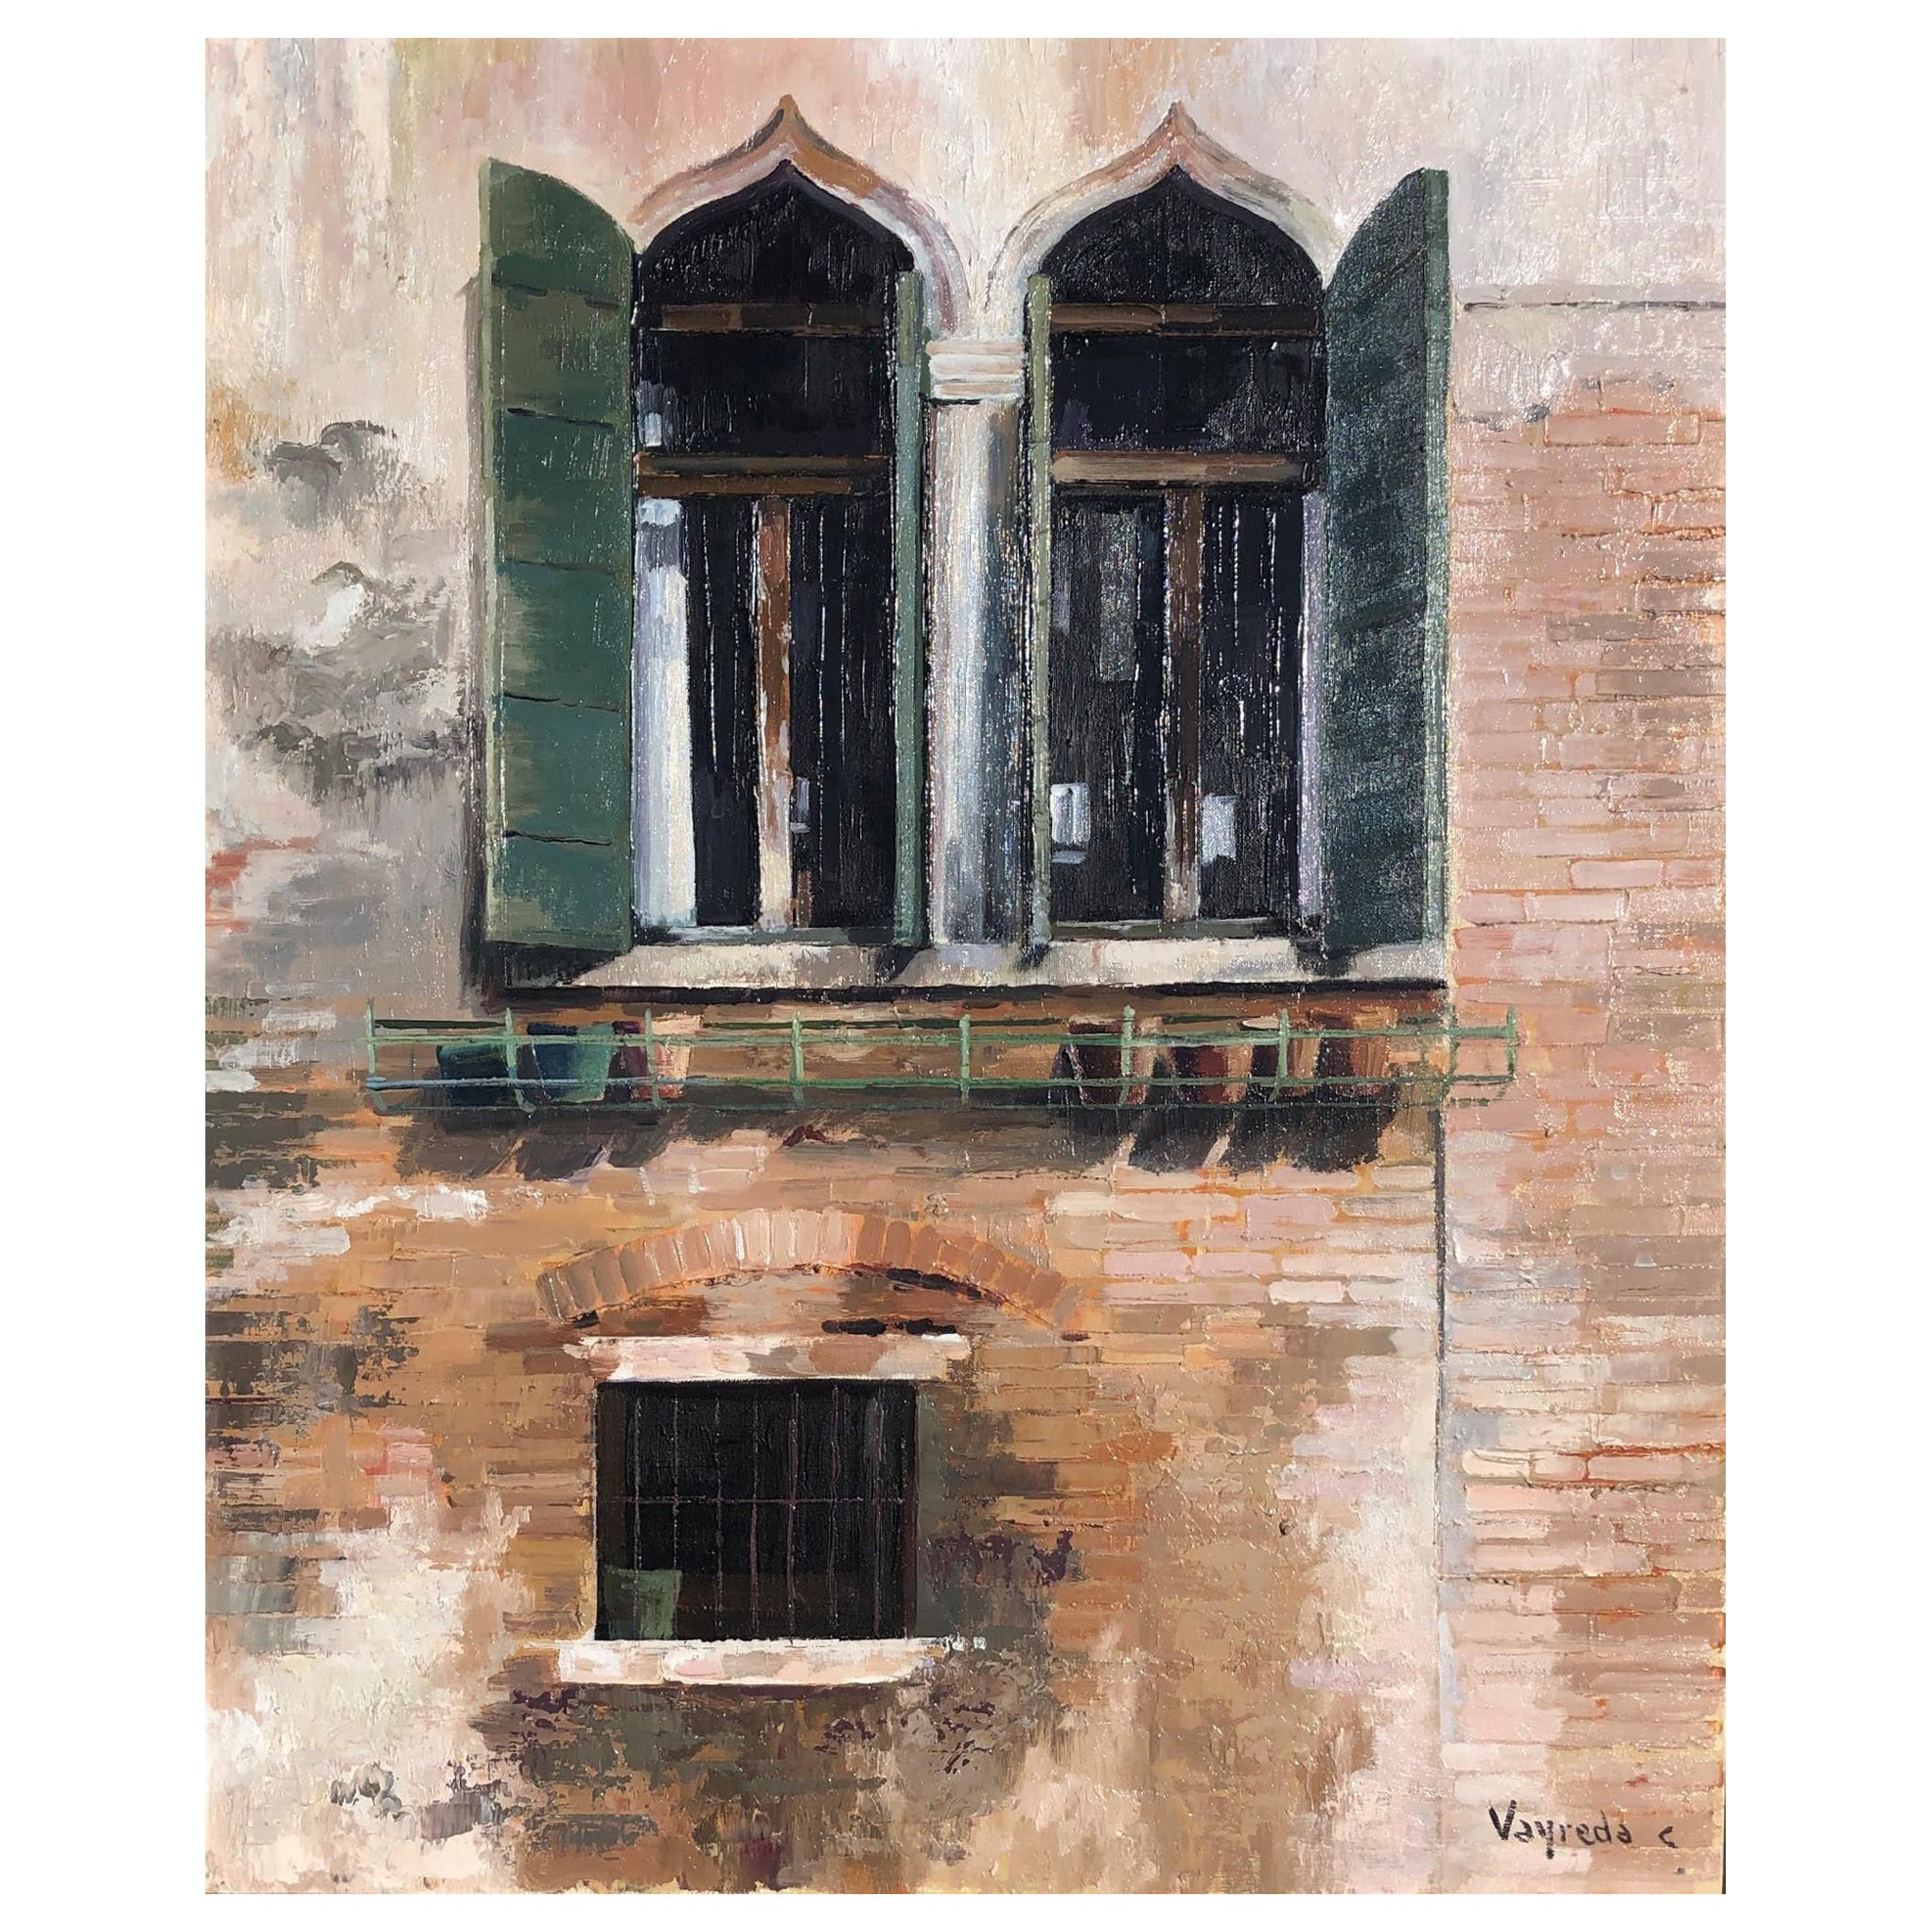 Josep Maria Vayreda Canadell Landscape Painting - Venice window original oil on canvas painting